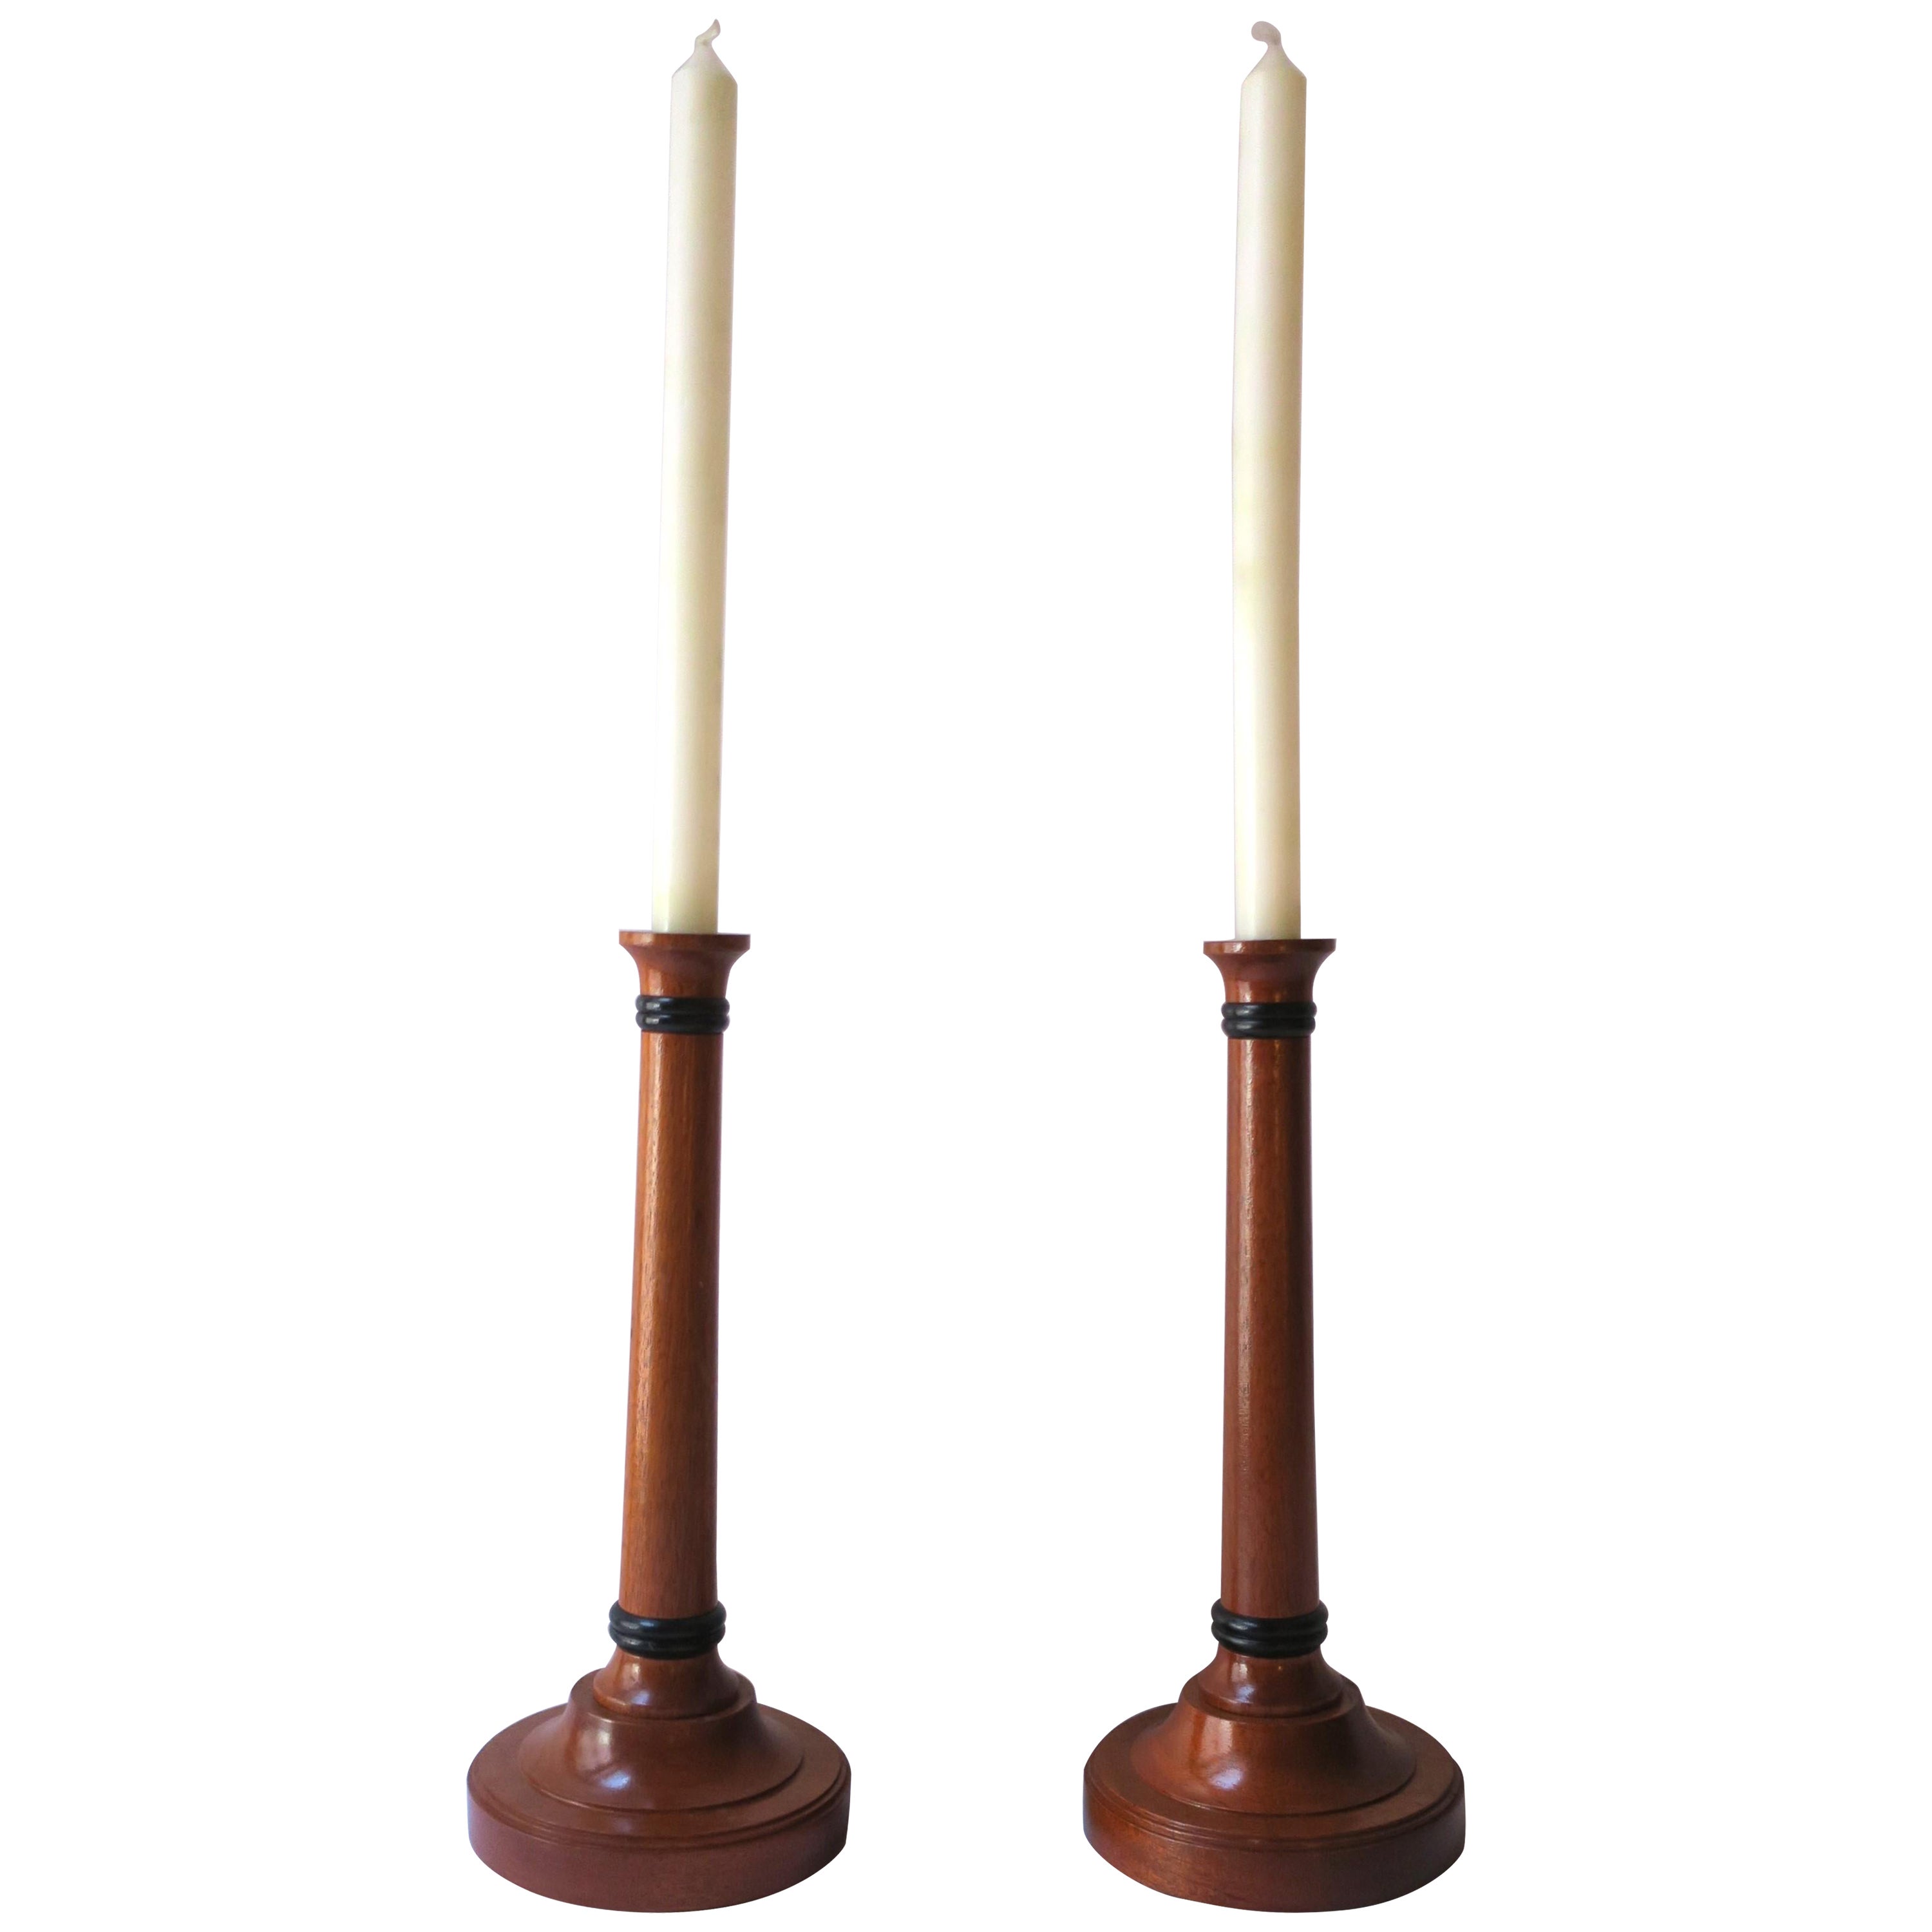 English Wood Candlesticks Holders, Pair